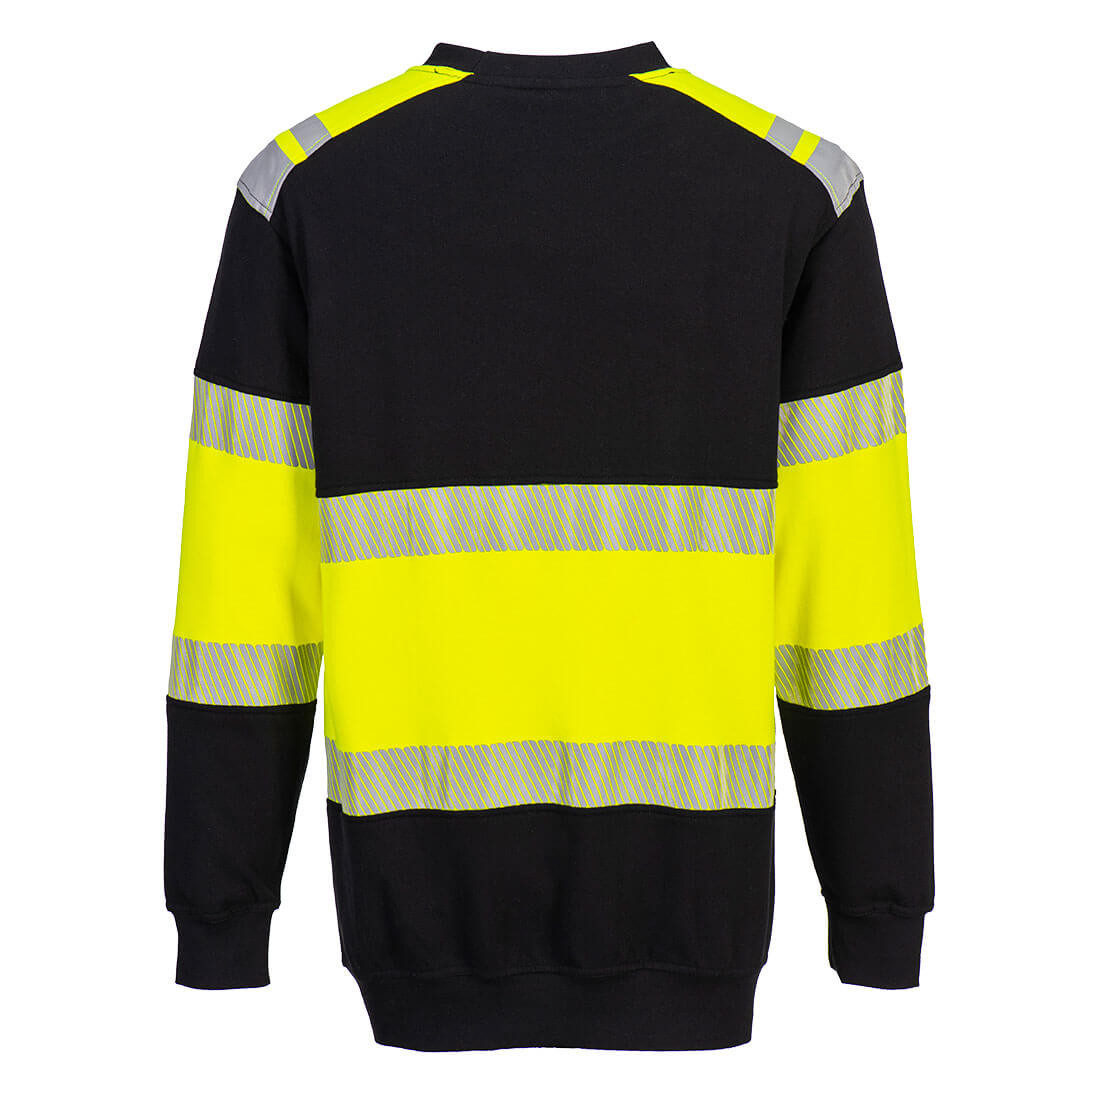 PW3 Flame Resistant Class 1 Sweatshirt - Safetywear